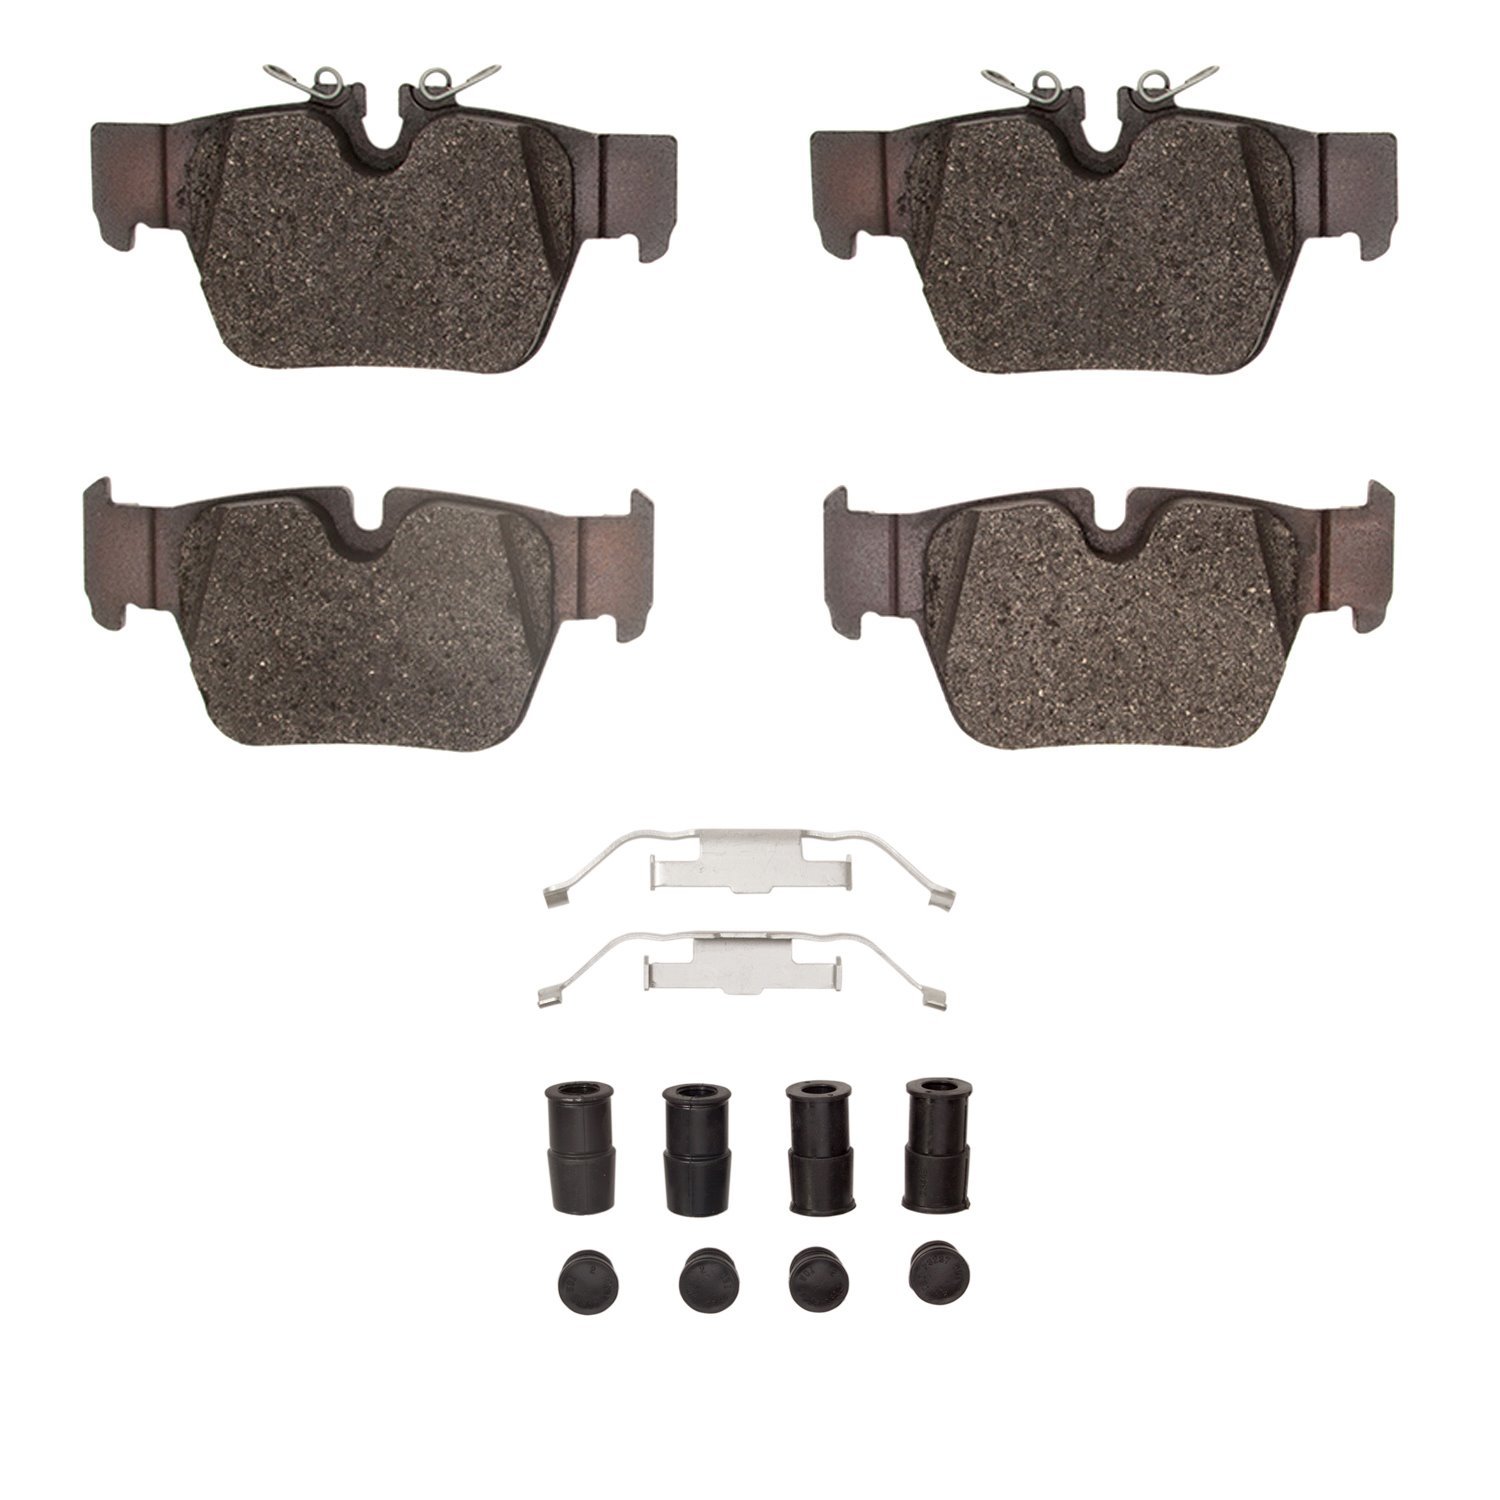 1551-2240-01 5000 Advanced Low-Metallic Brake Pads & Hardware Kit, Fits Select Multiple Makes/Models, Position: Rear